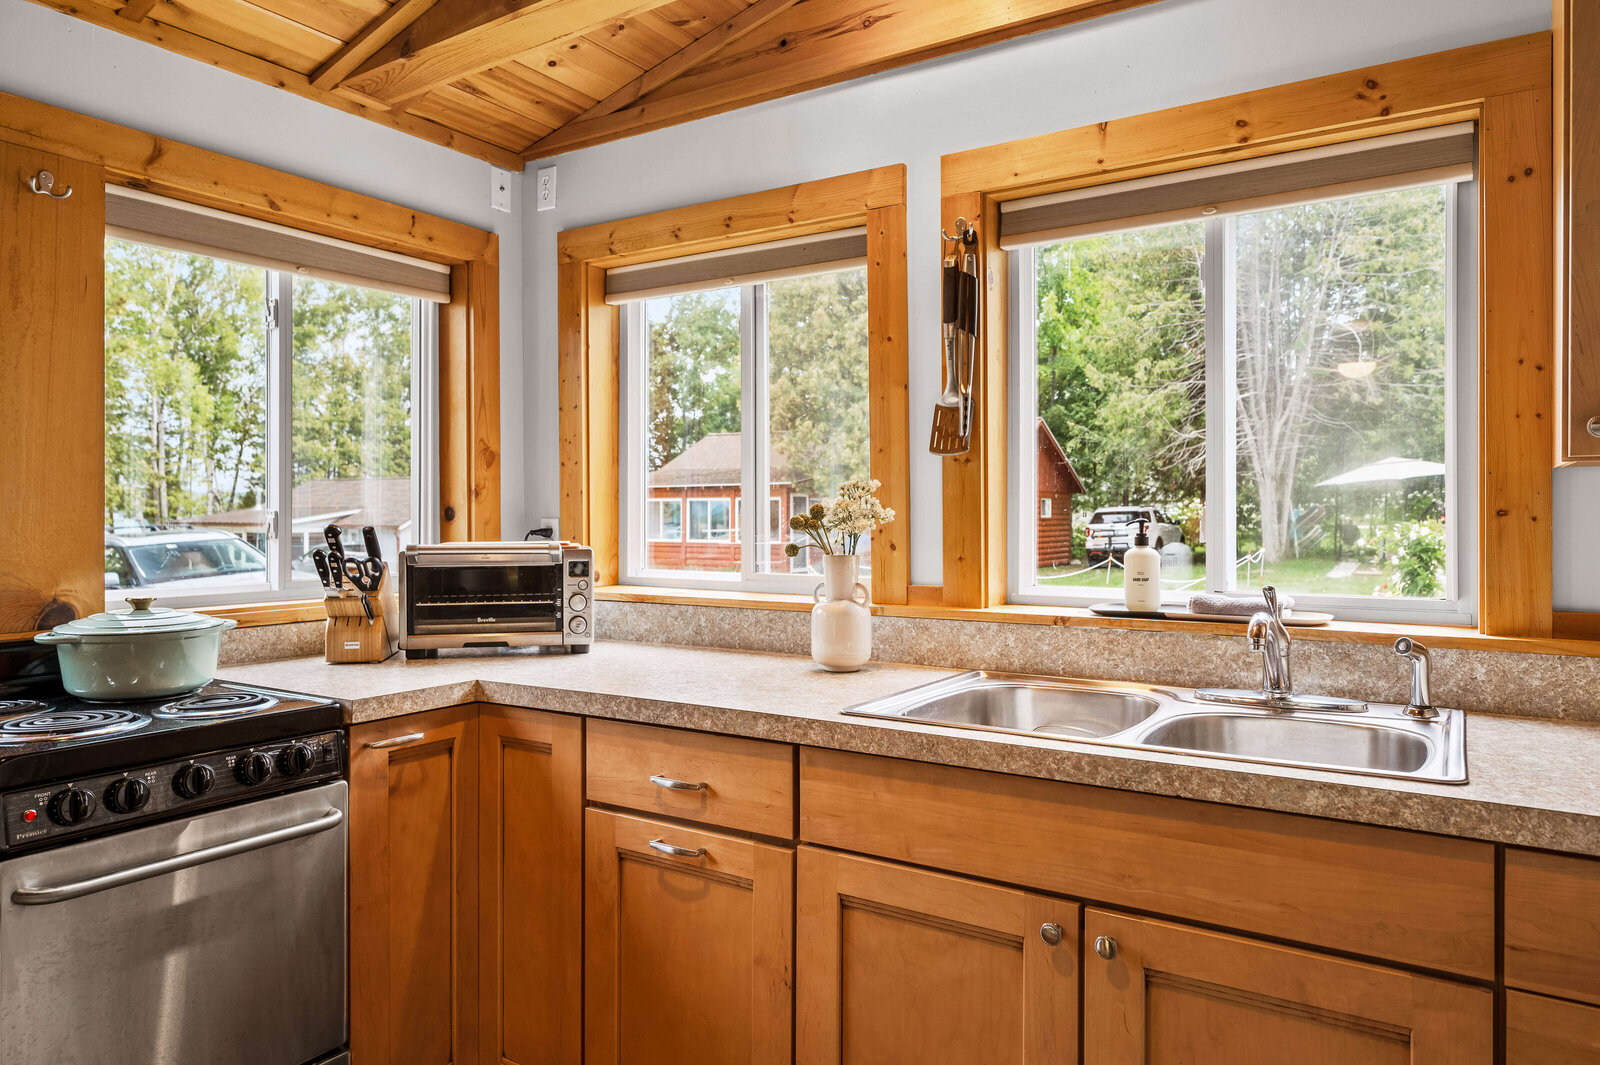 Bright cedar kitchen with natural light